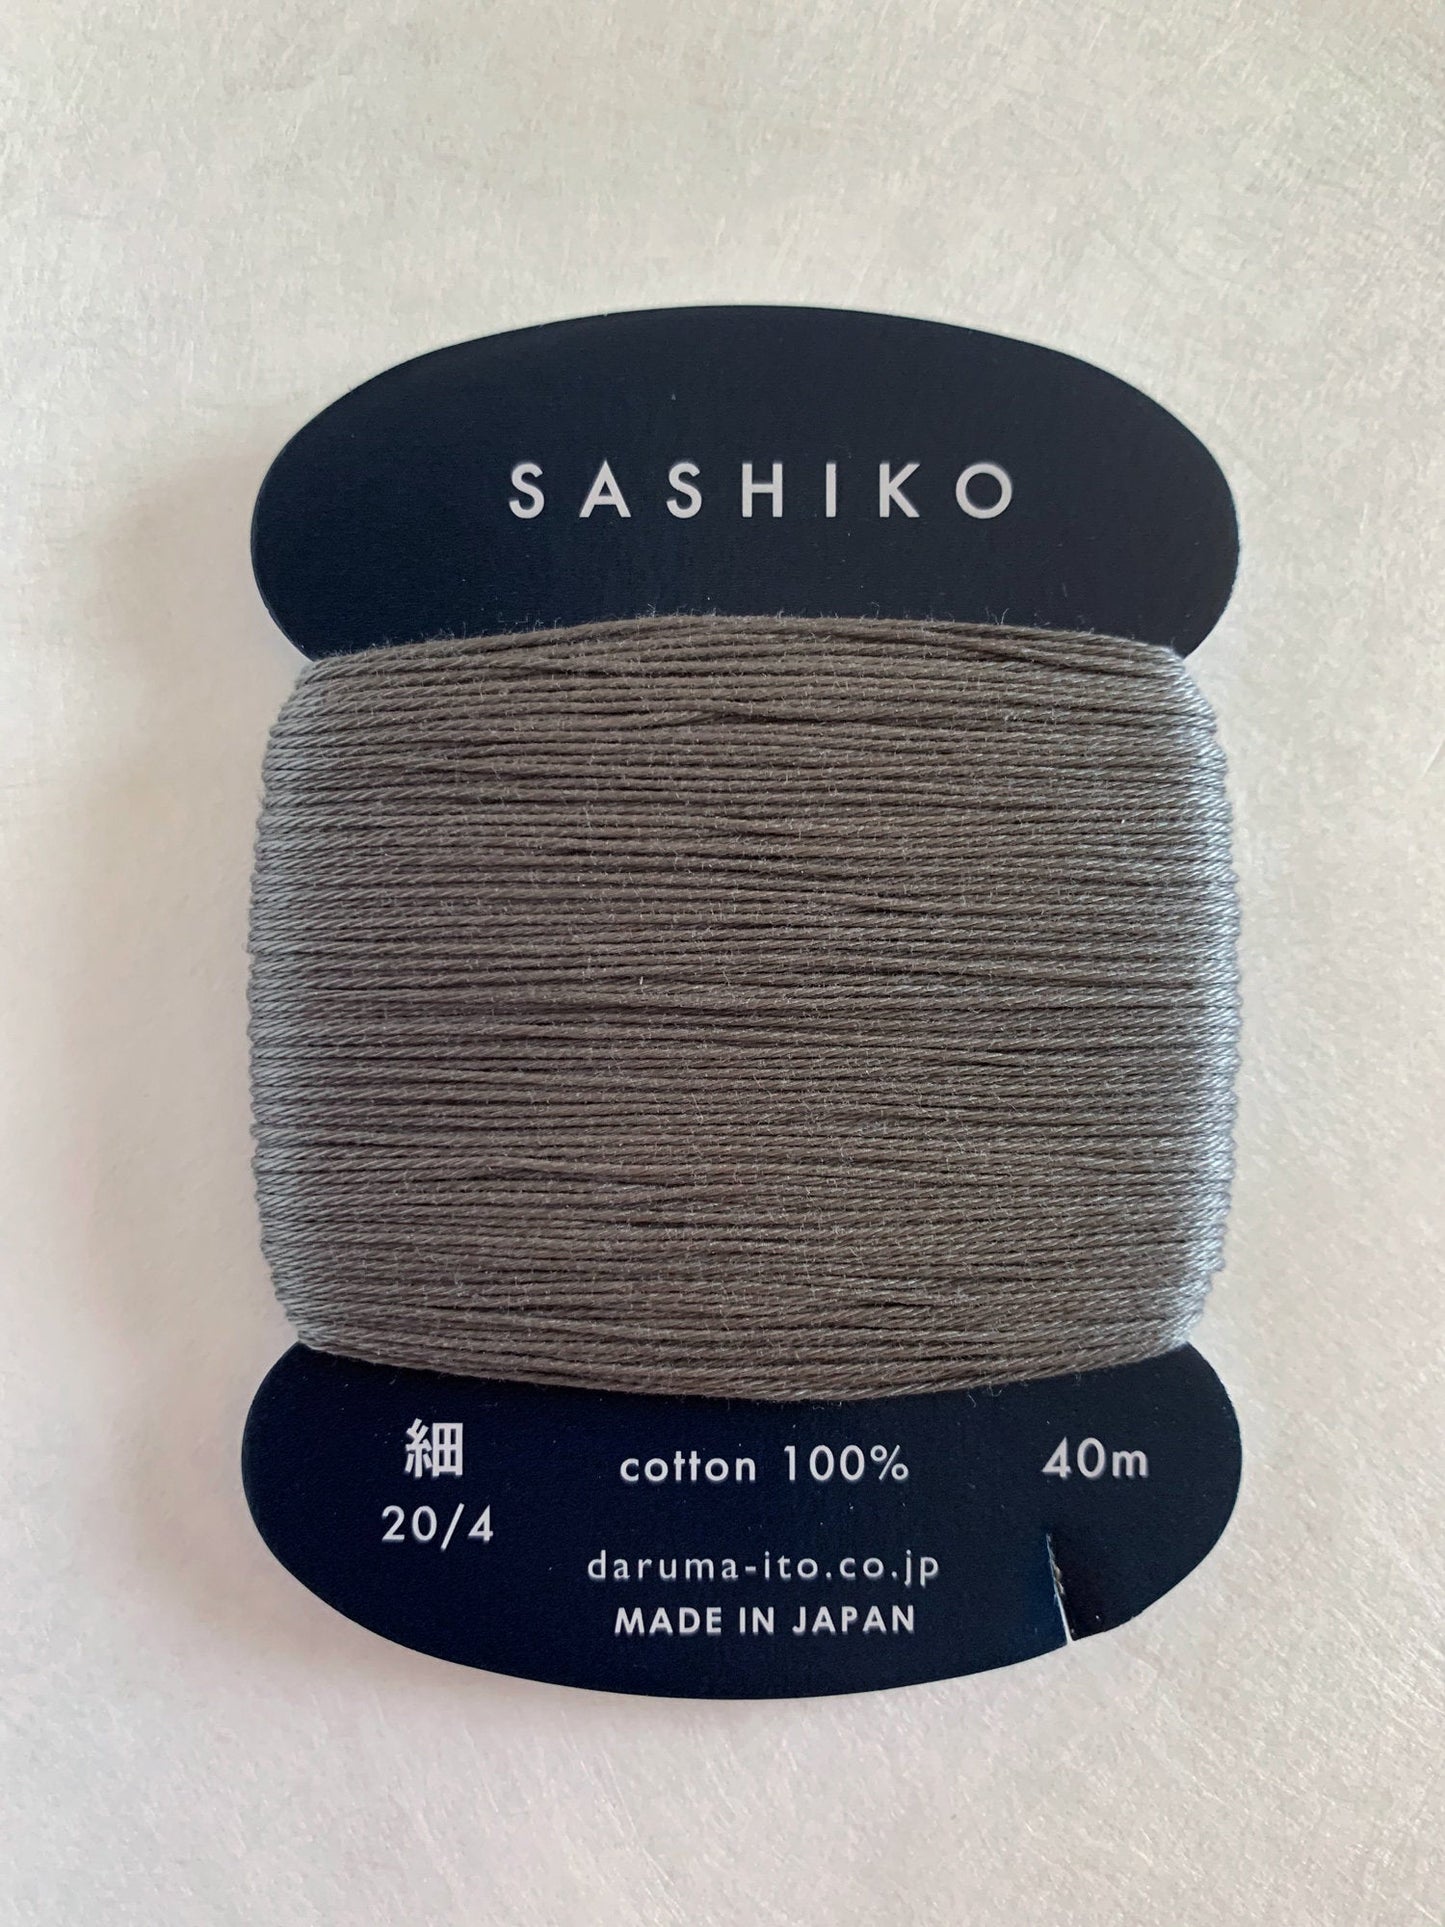 Daruma #229 GREY Japanese Cotton SASHIKO thread 40 meter skein 20/4 うねずみ mouse gray